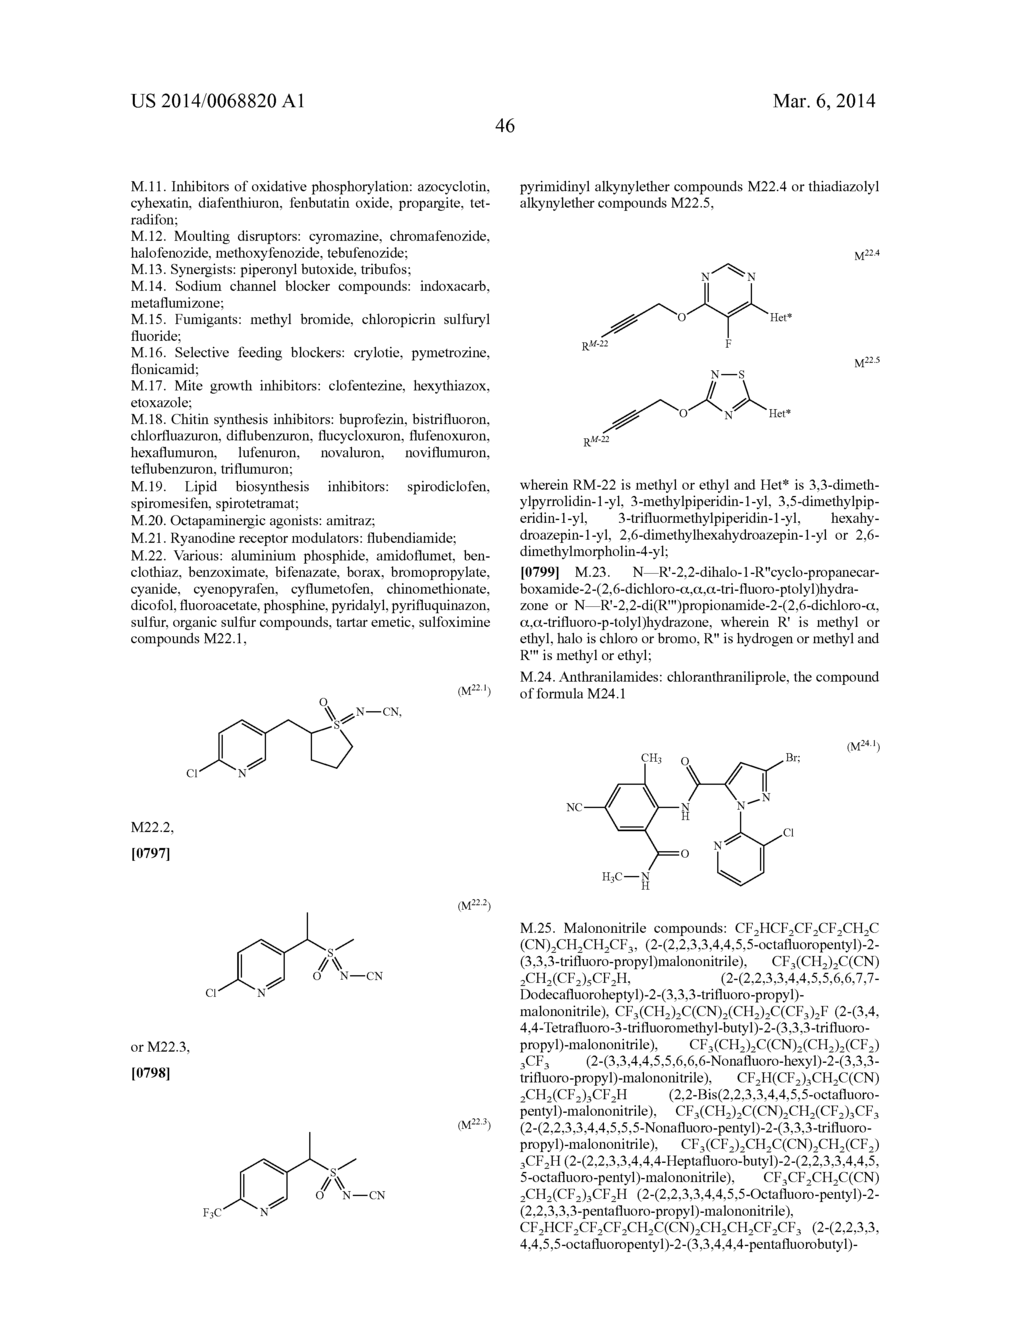 Pyrazole Compounds for Controlling Invertebrate Pests - diagram, schematic, and image 47